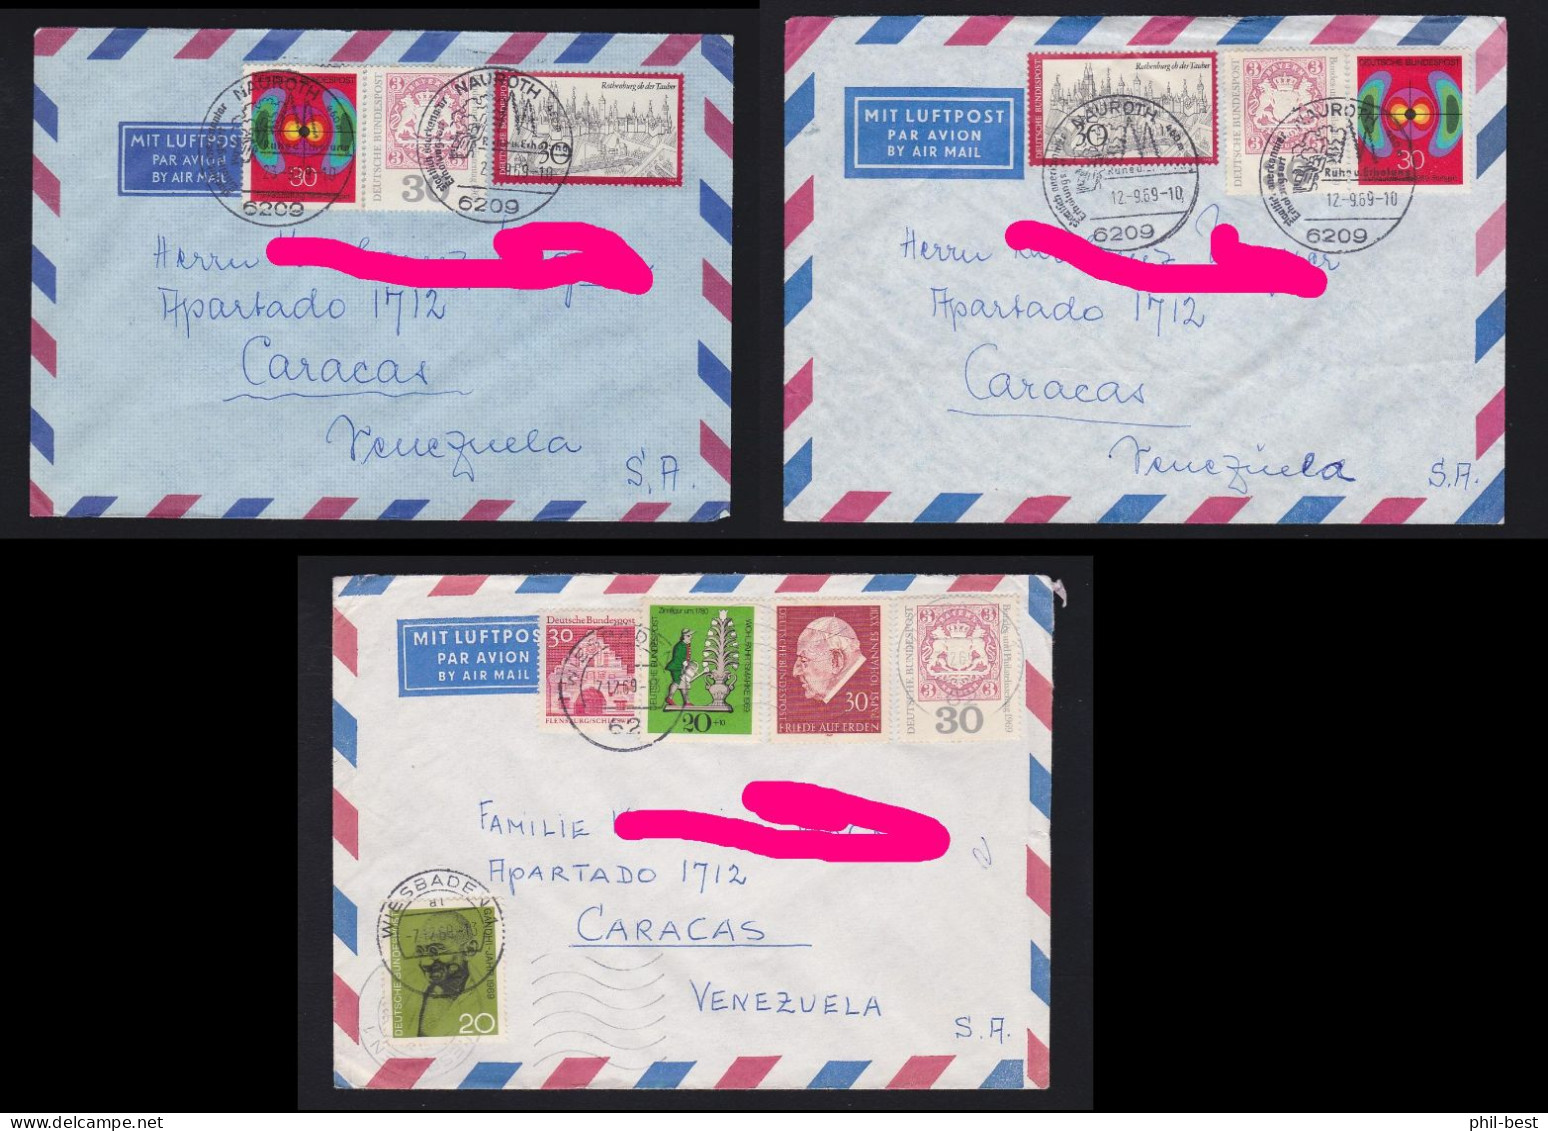 BRD 3 Luftpost Briefe Aus 1969 Nach CARACAS, VENEZUELA #J764 - Covers & Documents